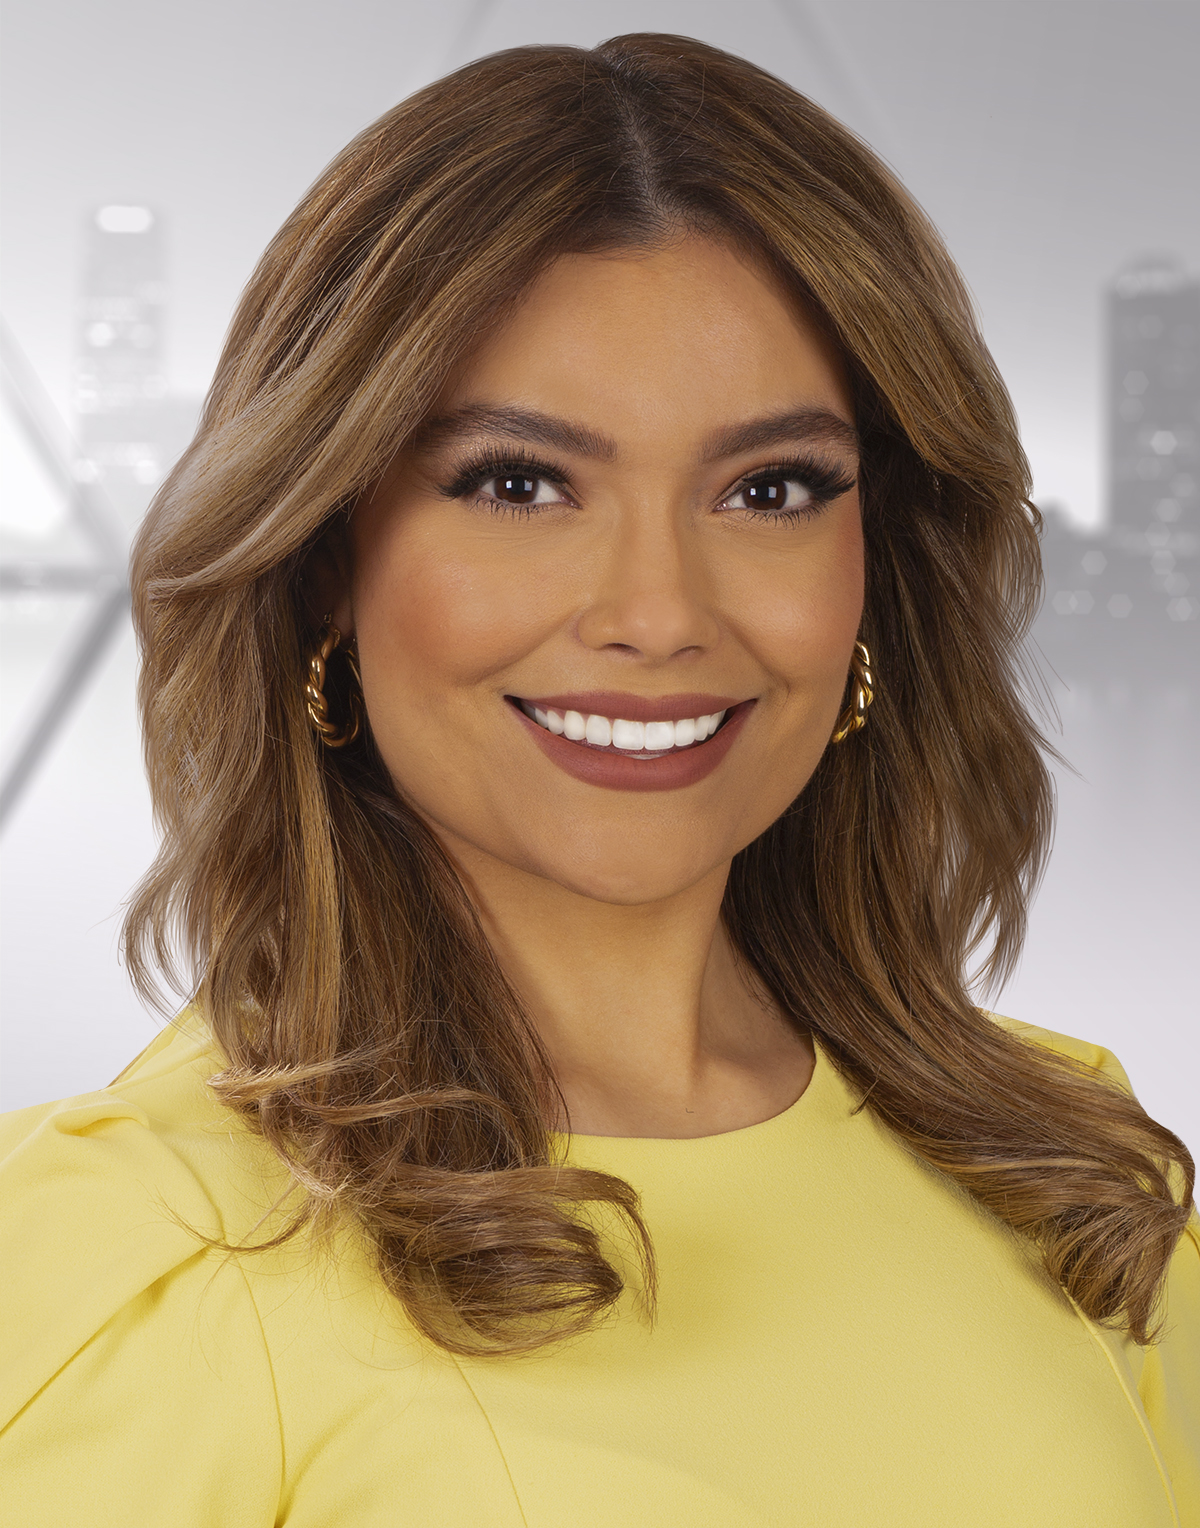 WISN 12 Announces Diana Gutiérrez as the New Co-Anchor of ‘WISN 12 News at 10 p.m.’